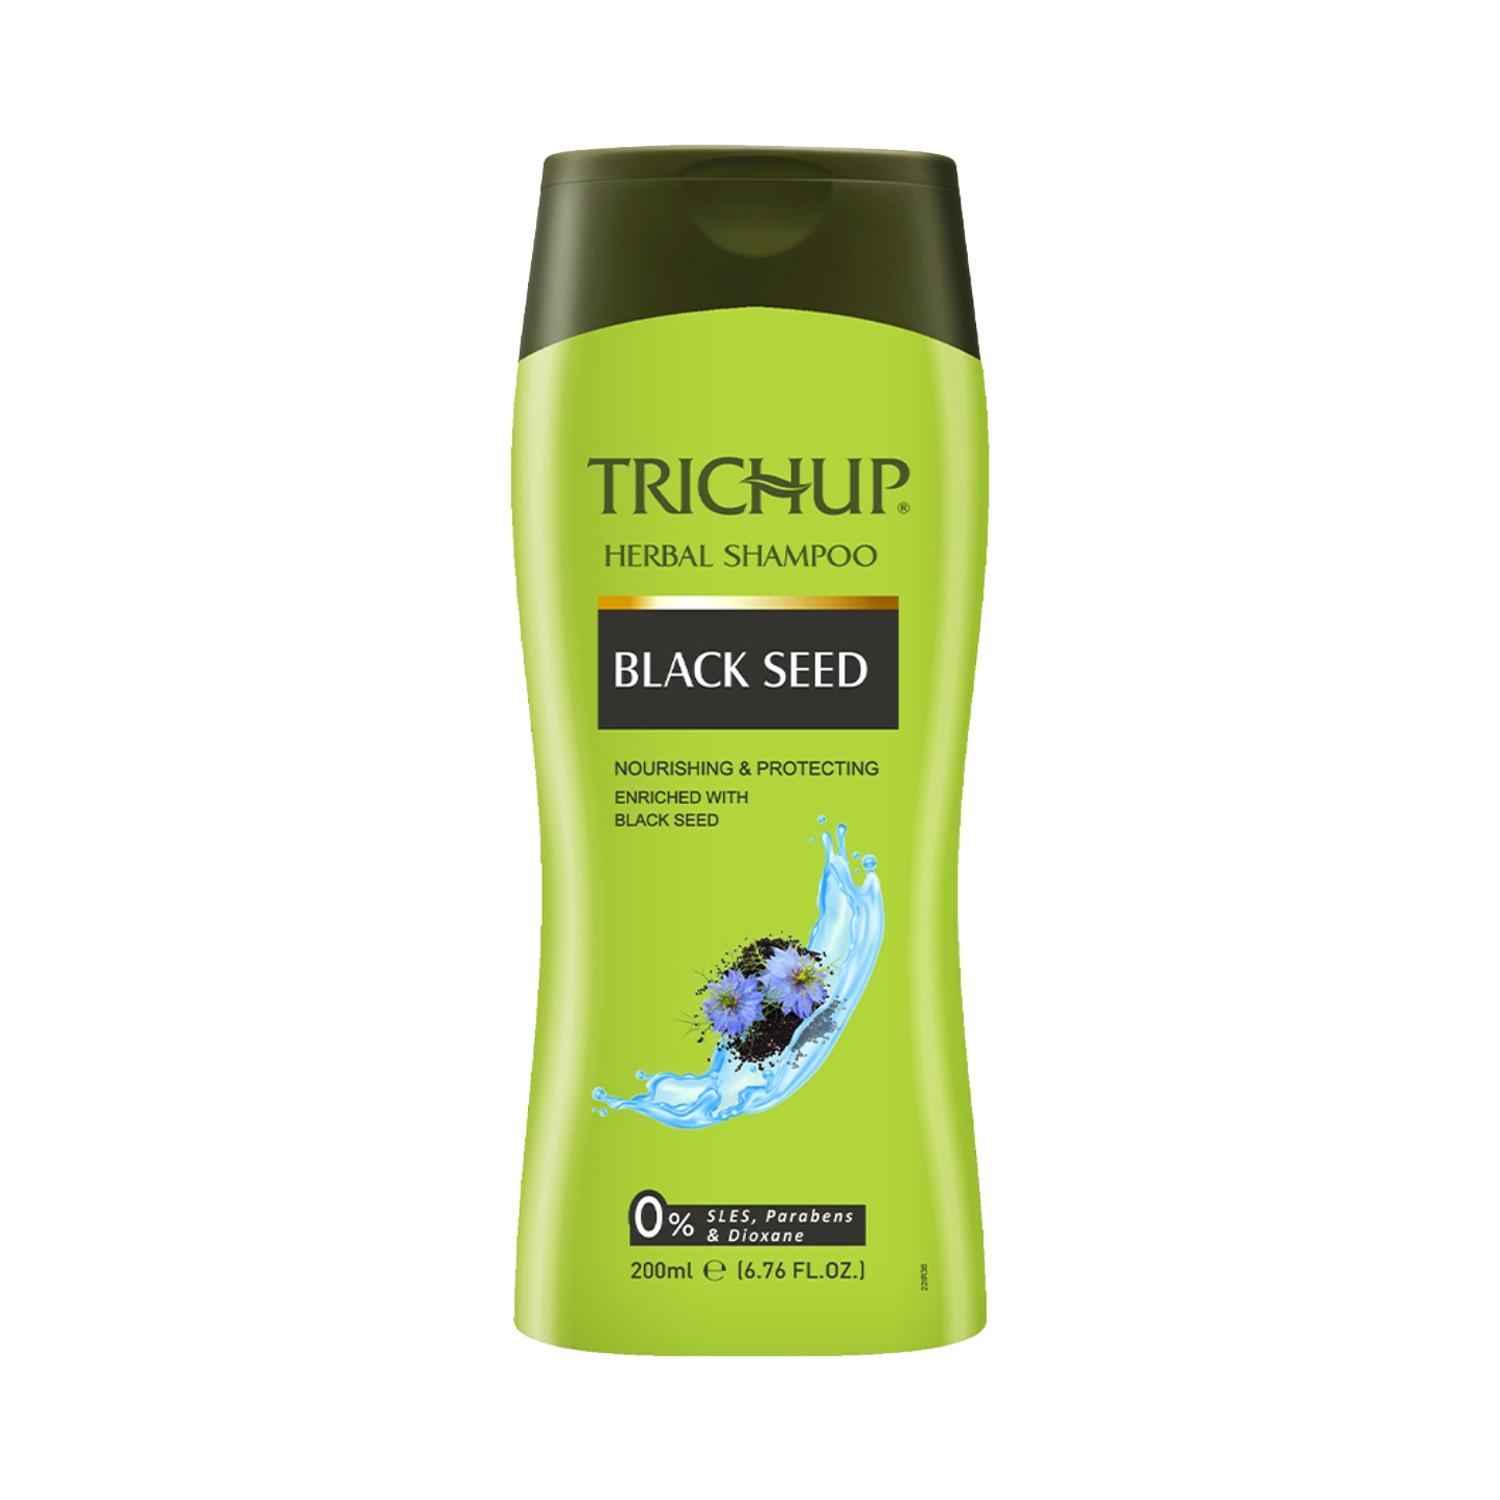 Trichup Black Seed Herbal Shampoo (200ml)